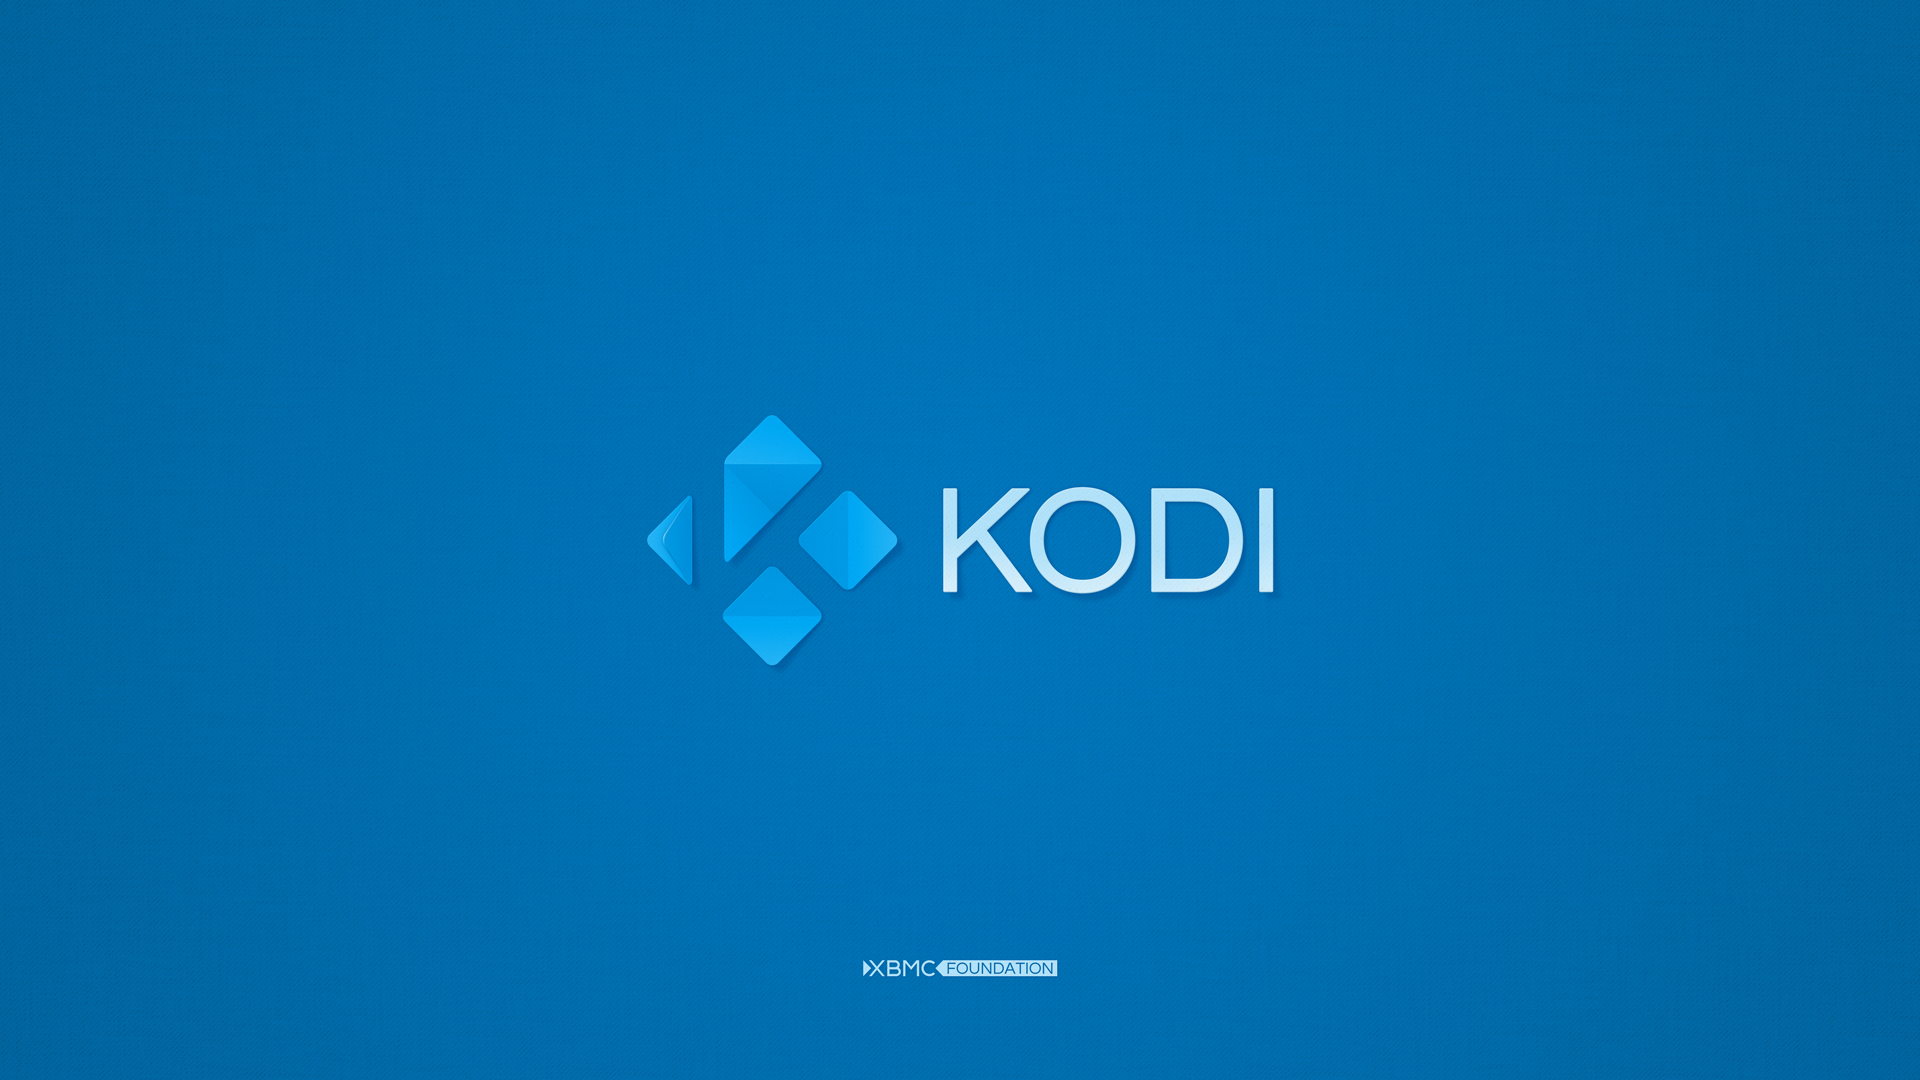 File:Kodi-Wallpaper-17D-1080p samfisher.jpg